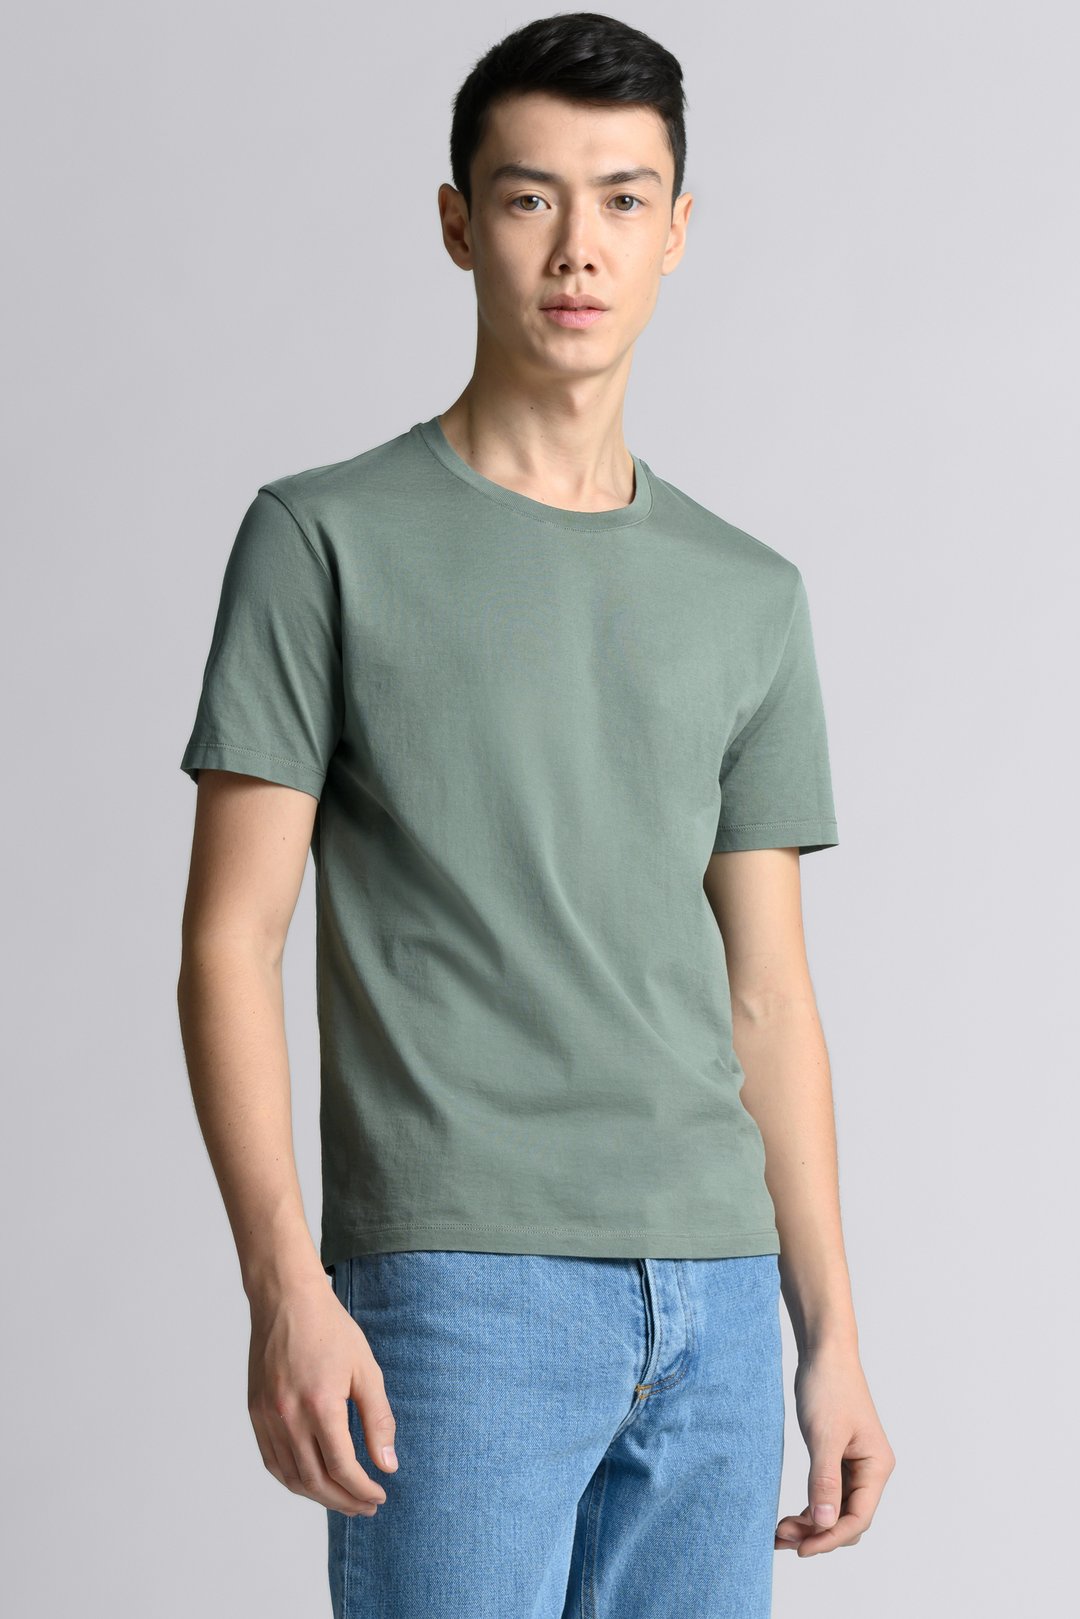 Cold Green Lightweight T-Shirt | ELS Cotton Crewneck - ASKET